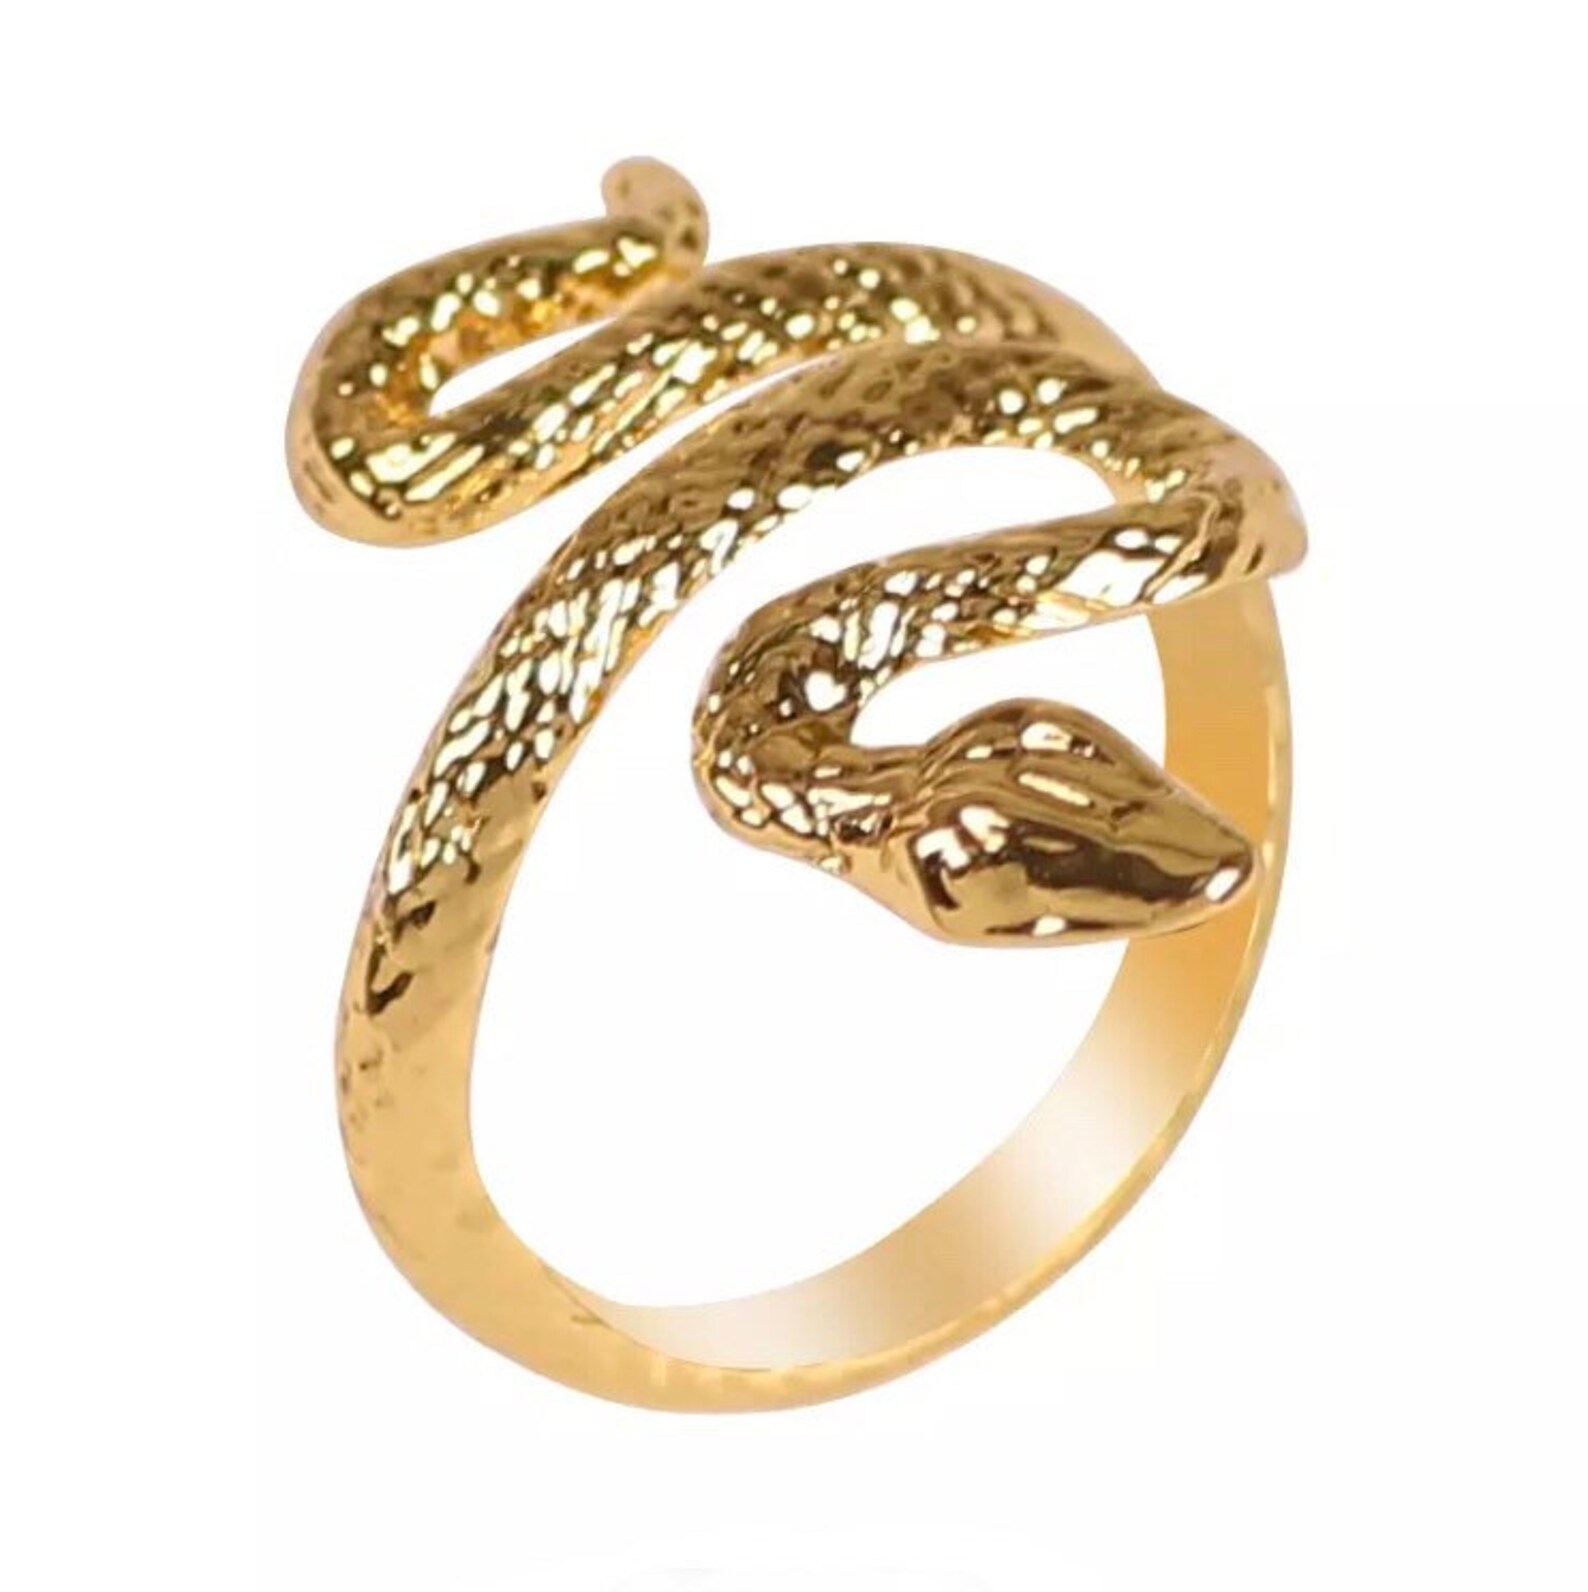 Gold Plated Adjustable SNAKE Fashion Ring - Etsy